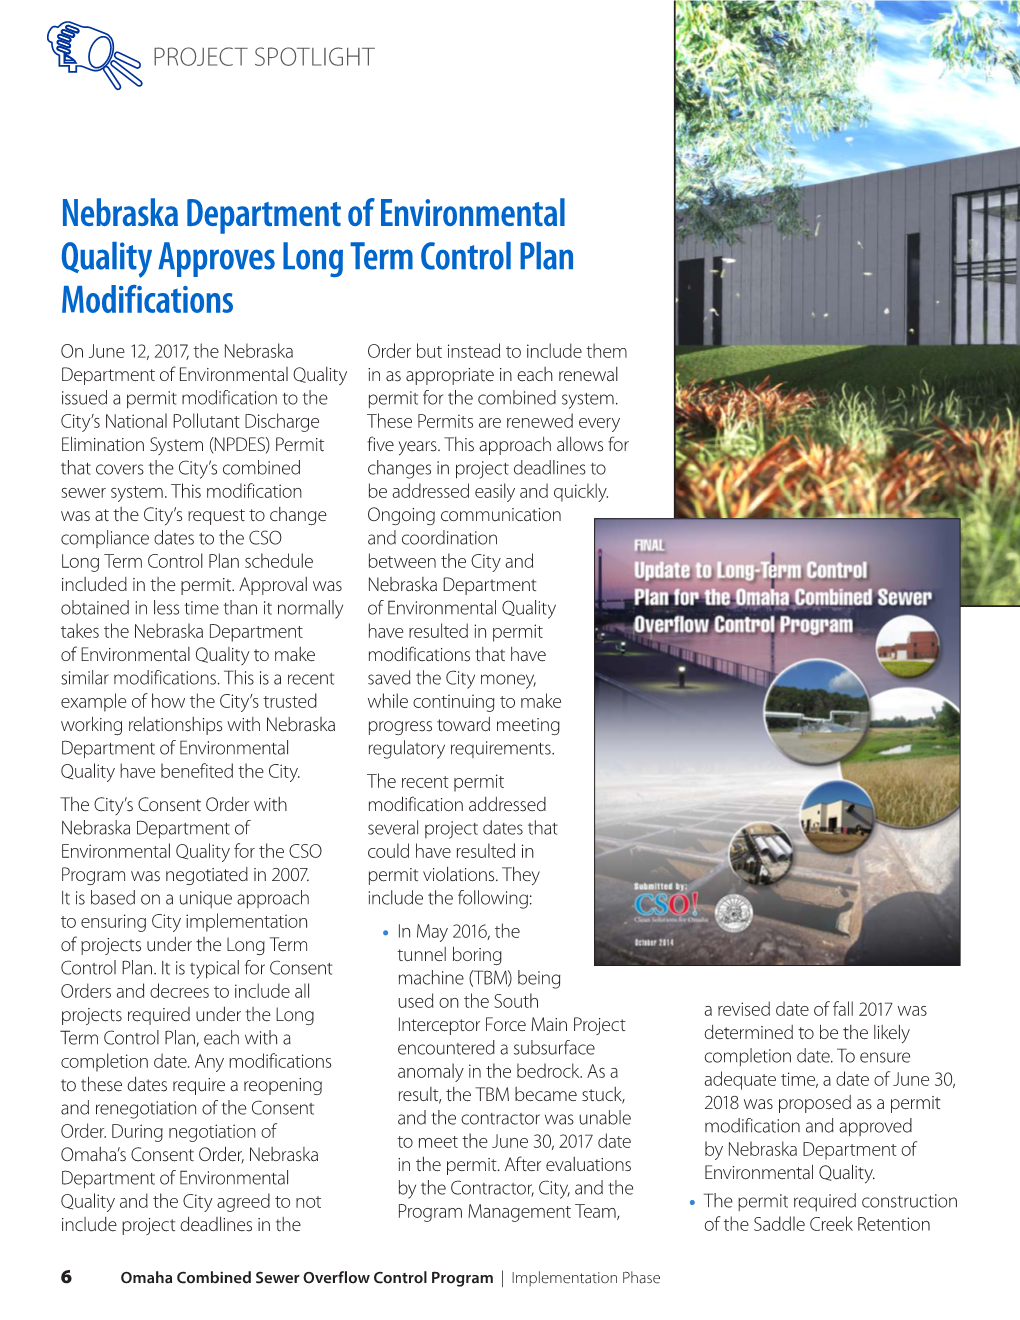 Nebraska Department of Environmental Quality Approves Long Term Control Plan Modifications